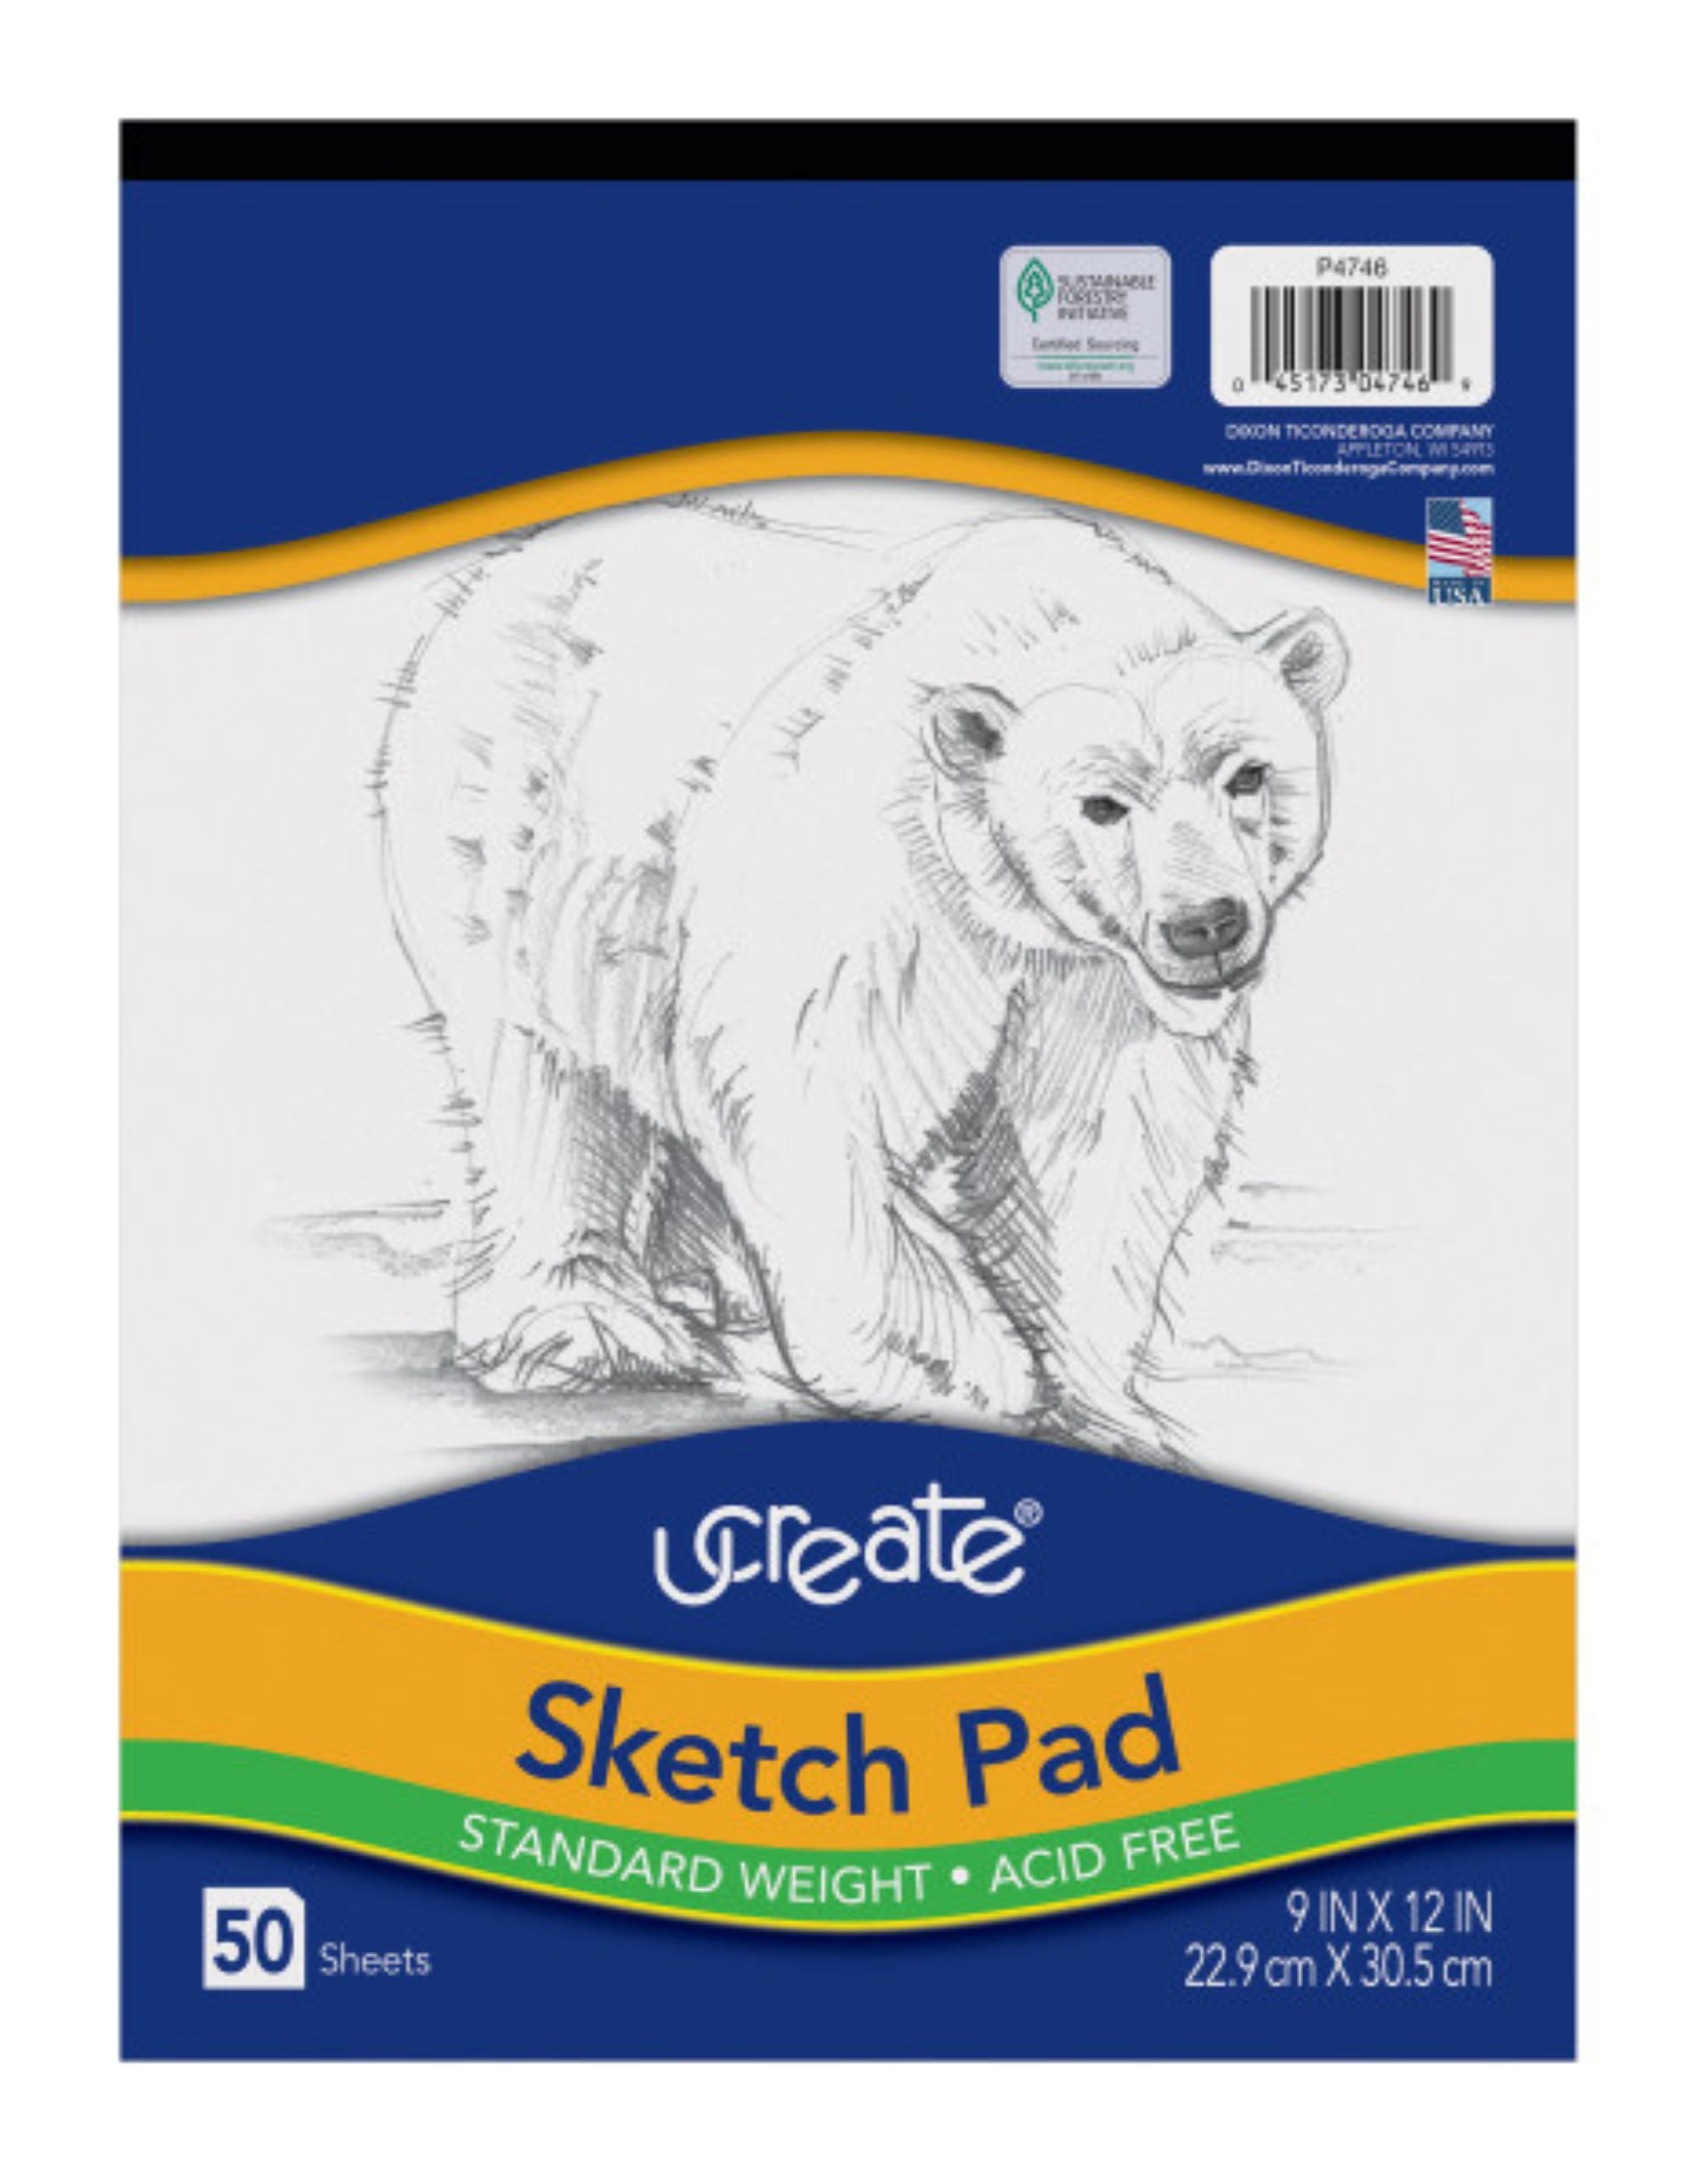 Walmart Art Supply Review uCreate Sketchbook